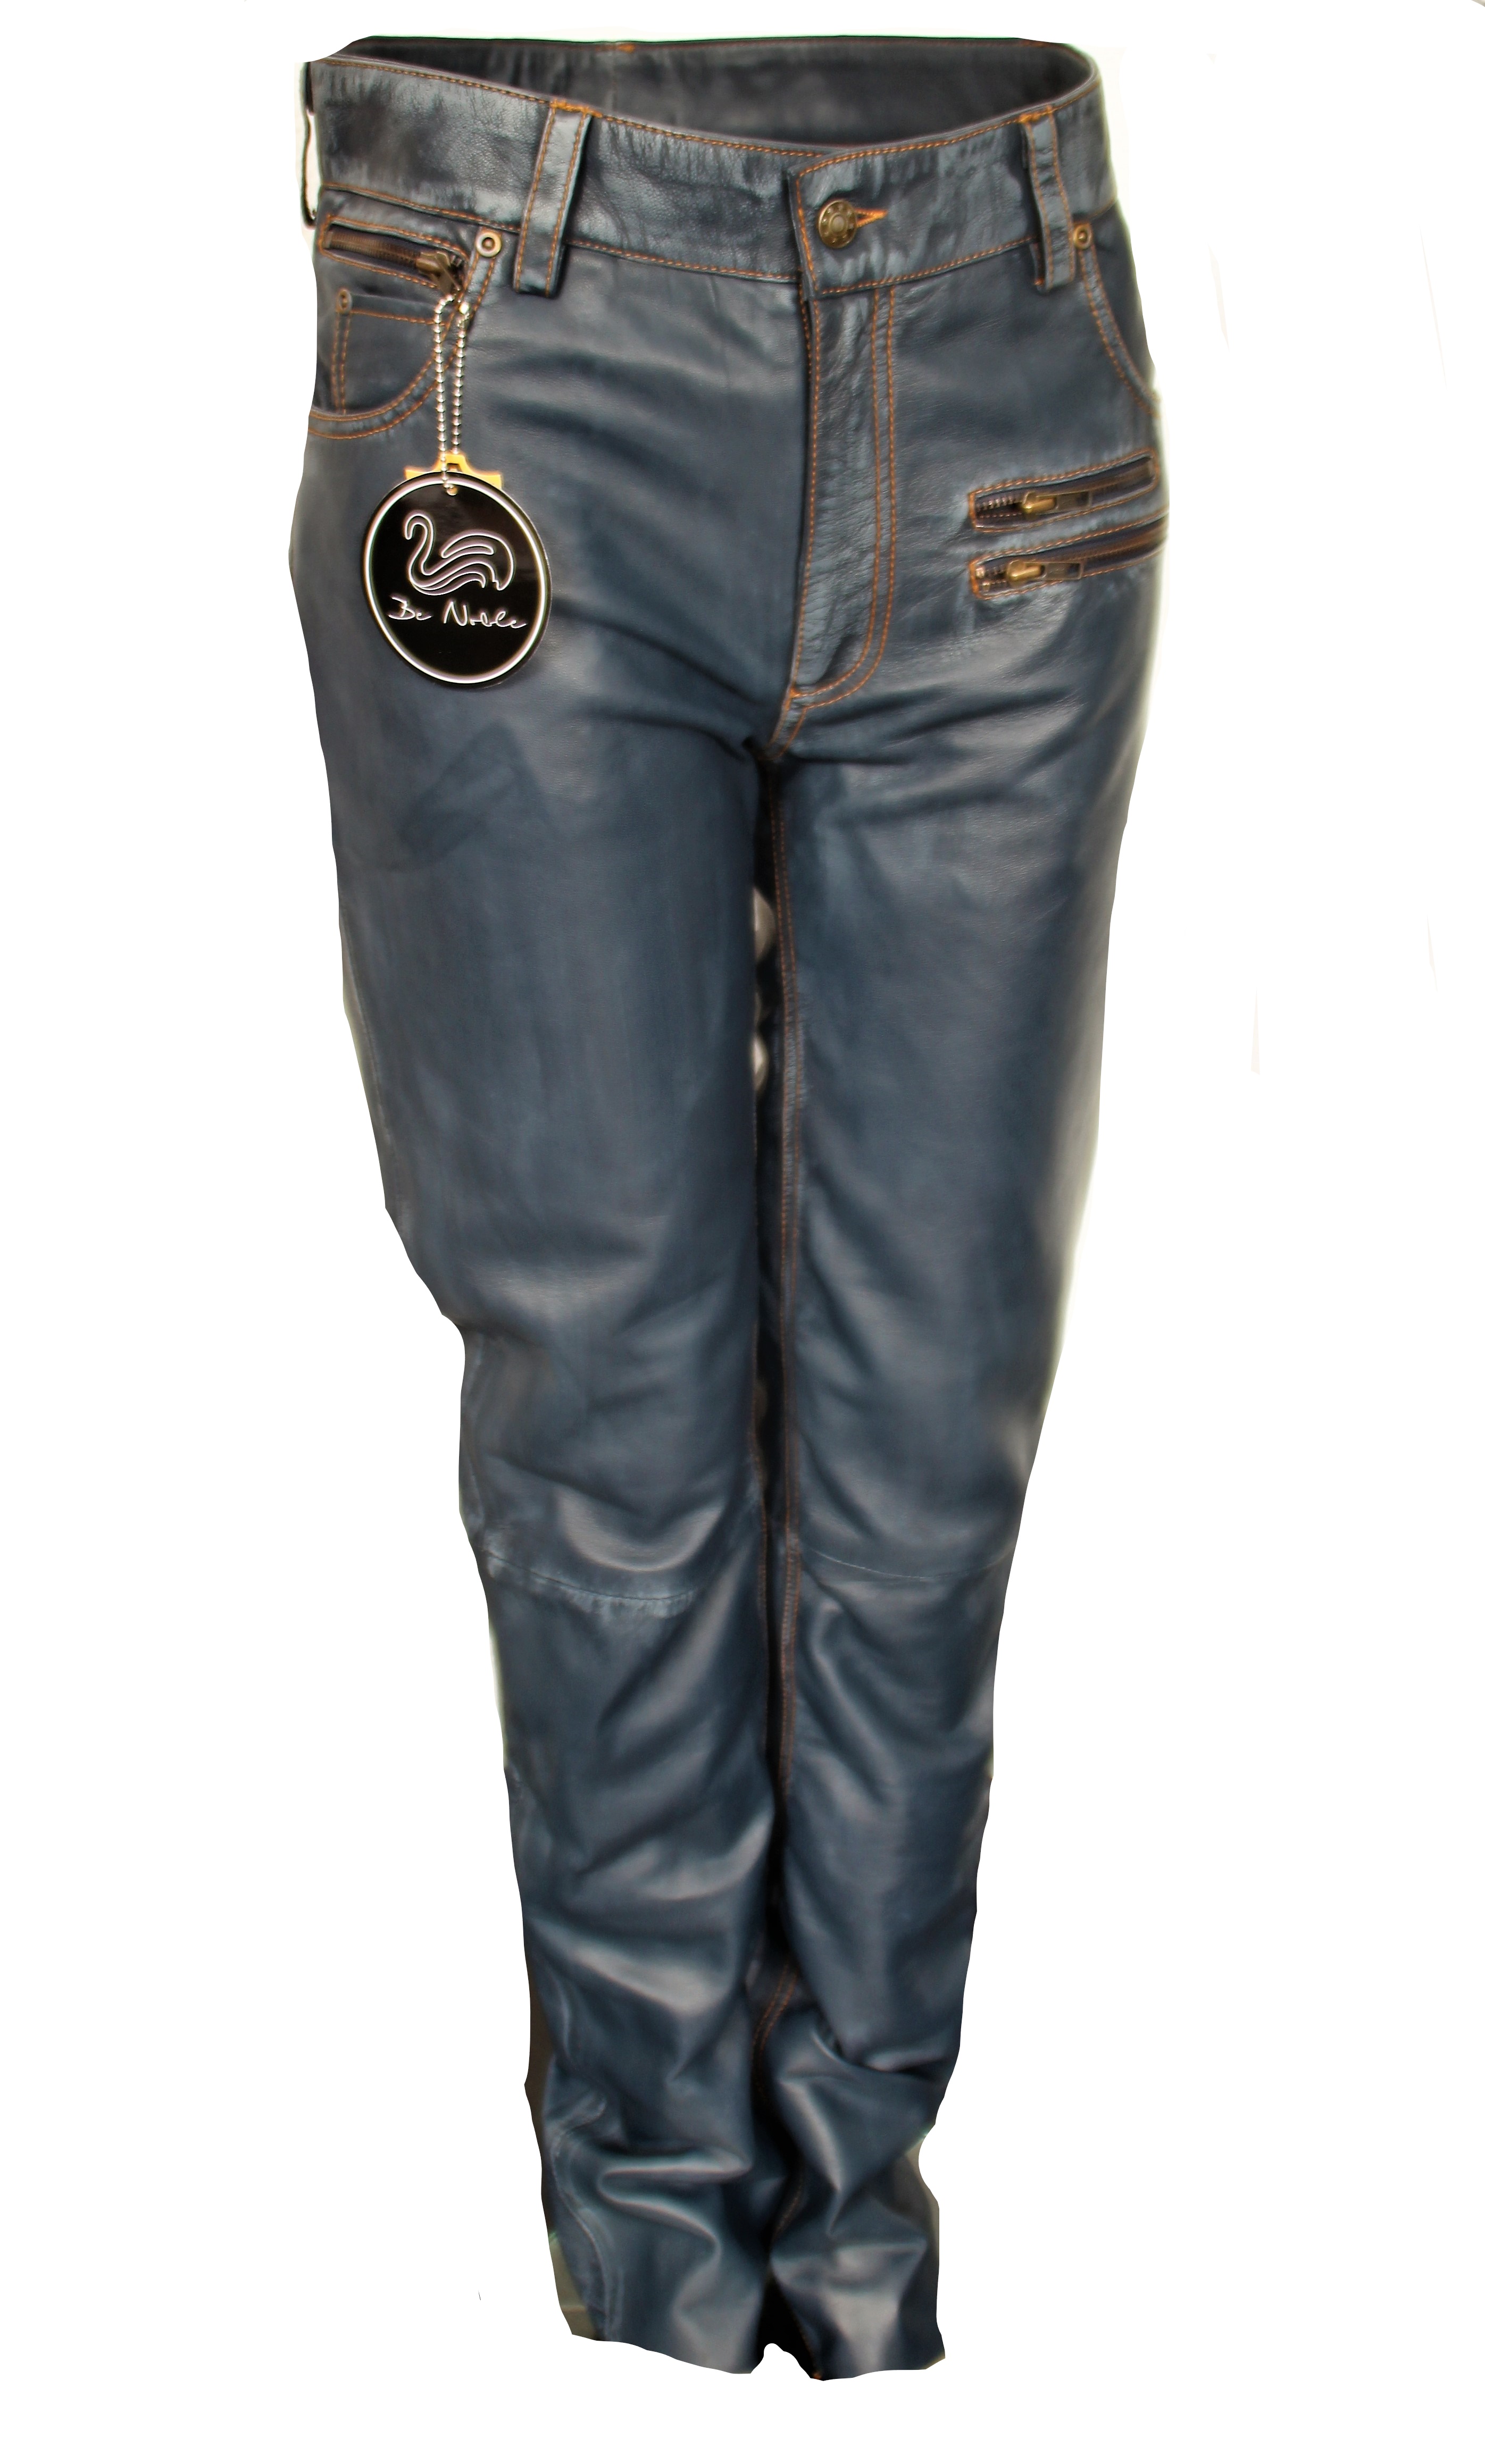 Designer Leather Jeans in GENUINE Leather in Dark Blue